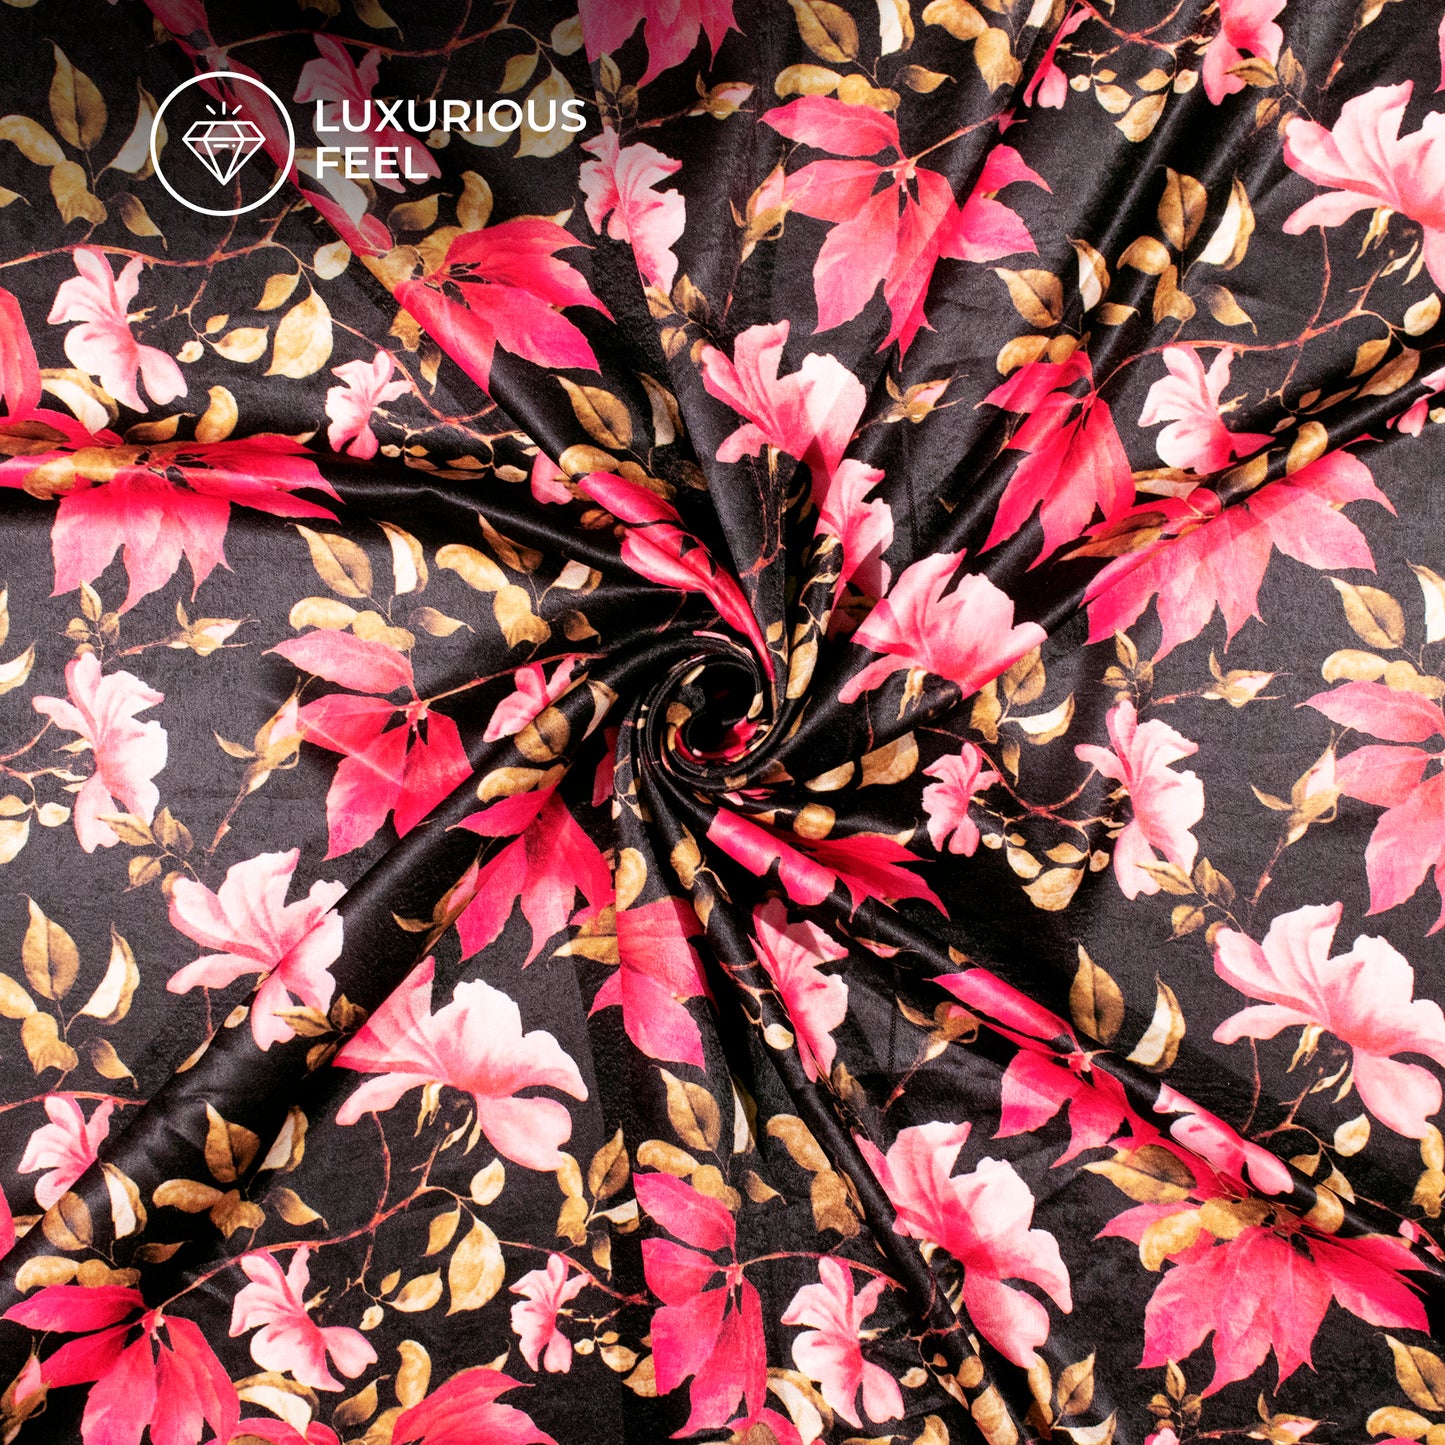 Vintage Floral Magic On Digital Print Lush Satin Fabric